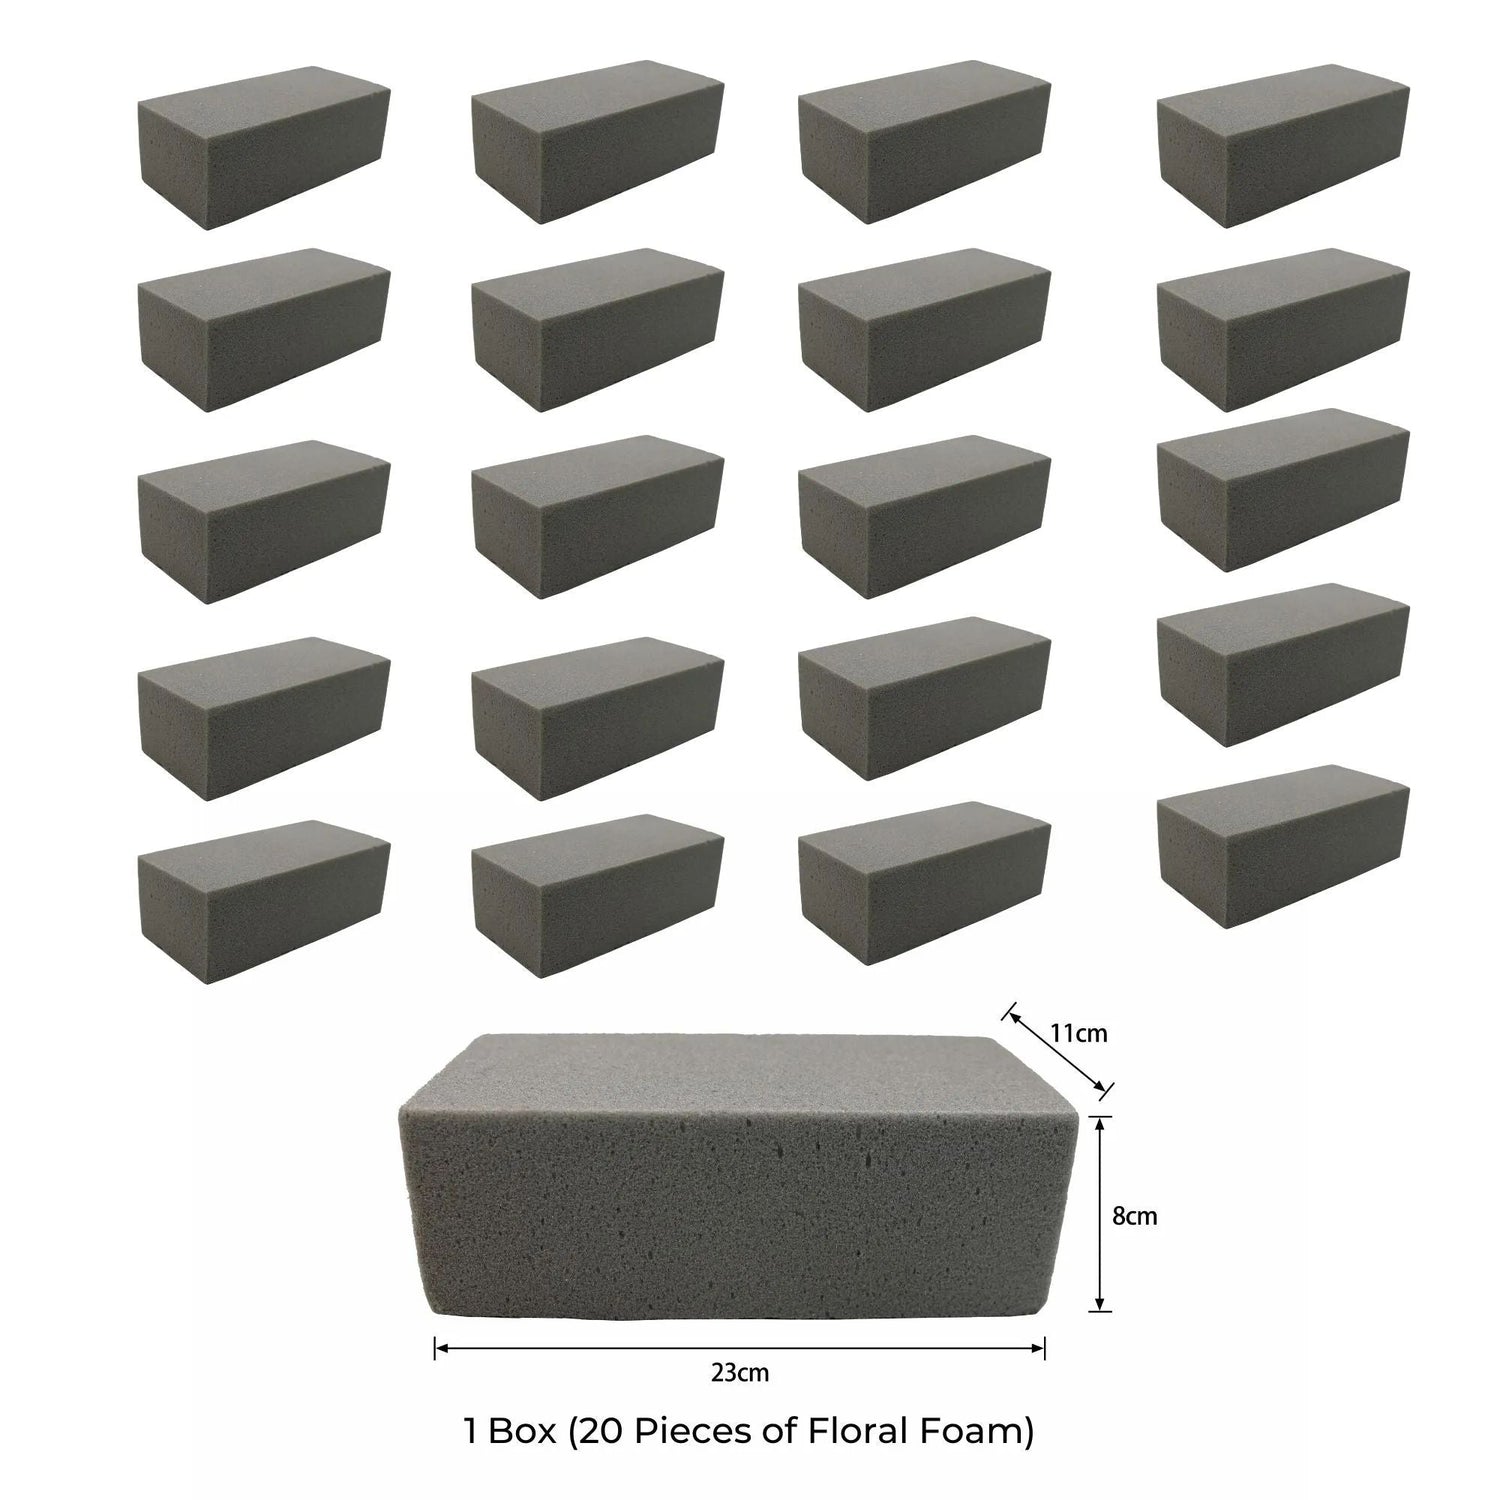 20 Pieces Of Dry Floral Foam Bricks 23cm X 11cm X 8cm (Artificial Plant Foam Blocks – Formaldehyde FREE) - Designer Vertical Gardens Installation Equipment